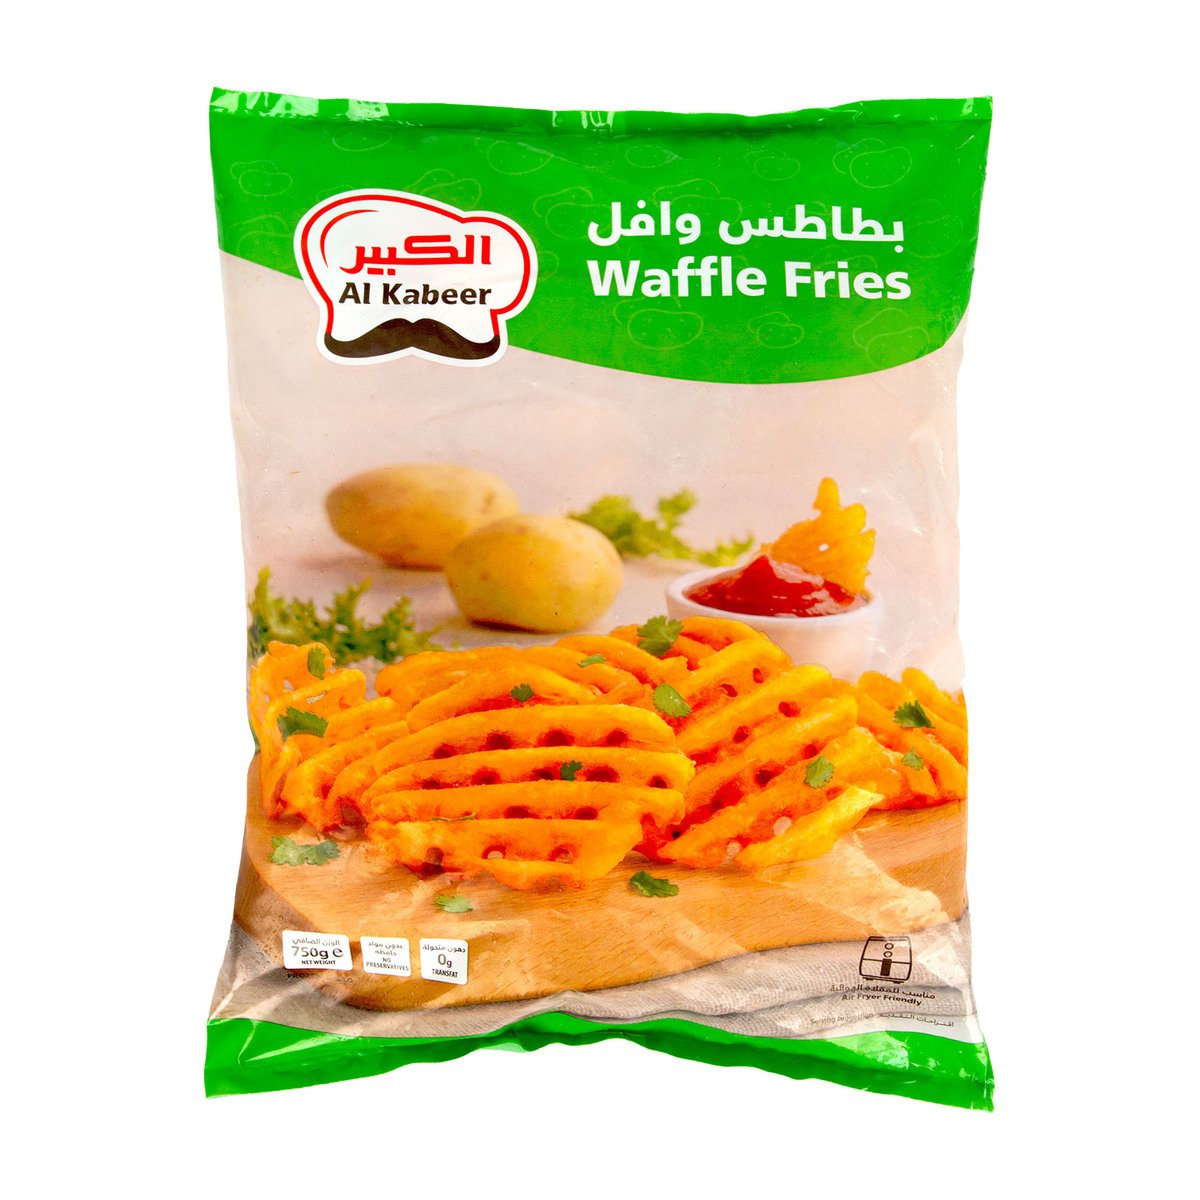 Al Kabeer Waffle Fries 750 g